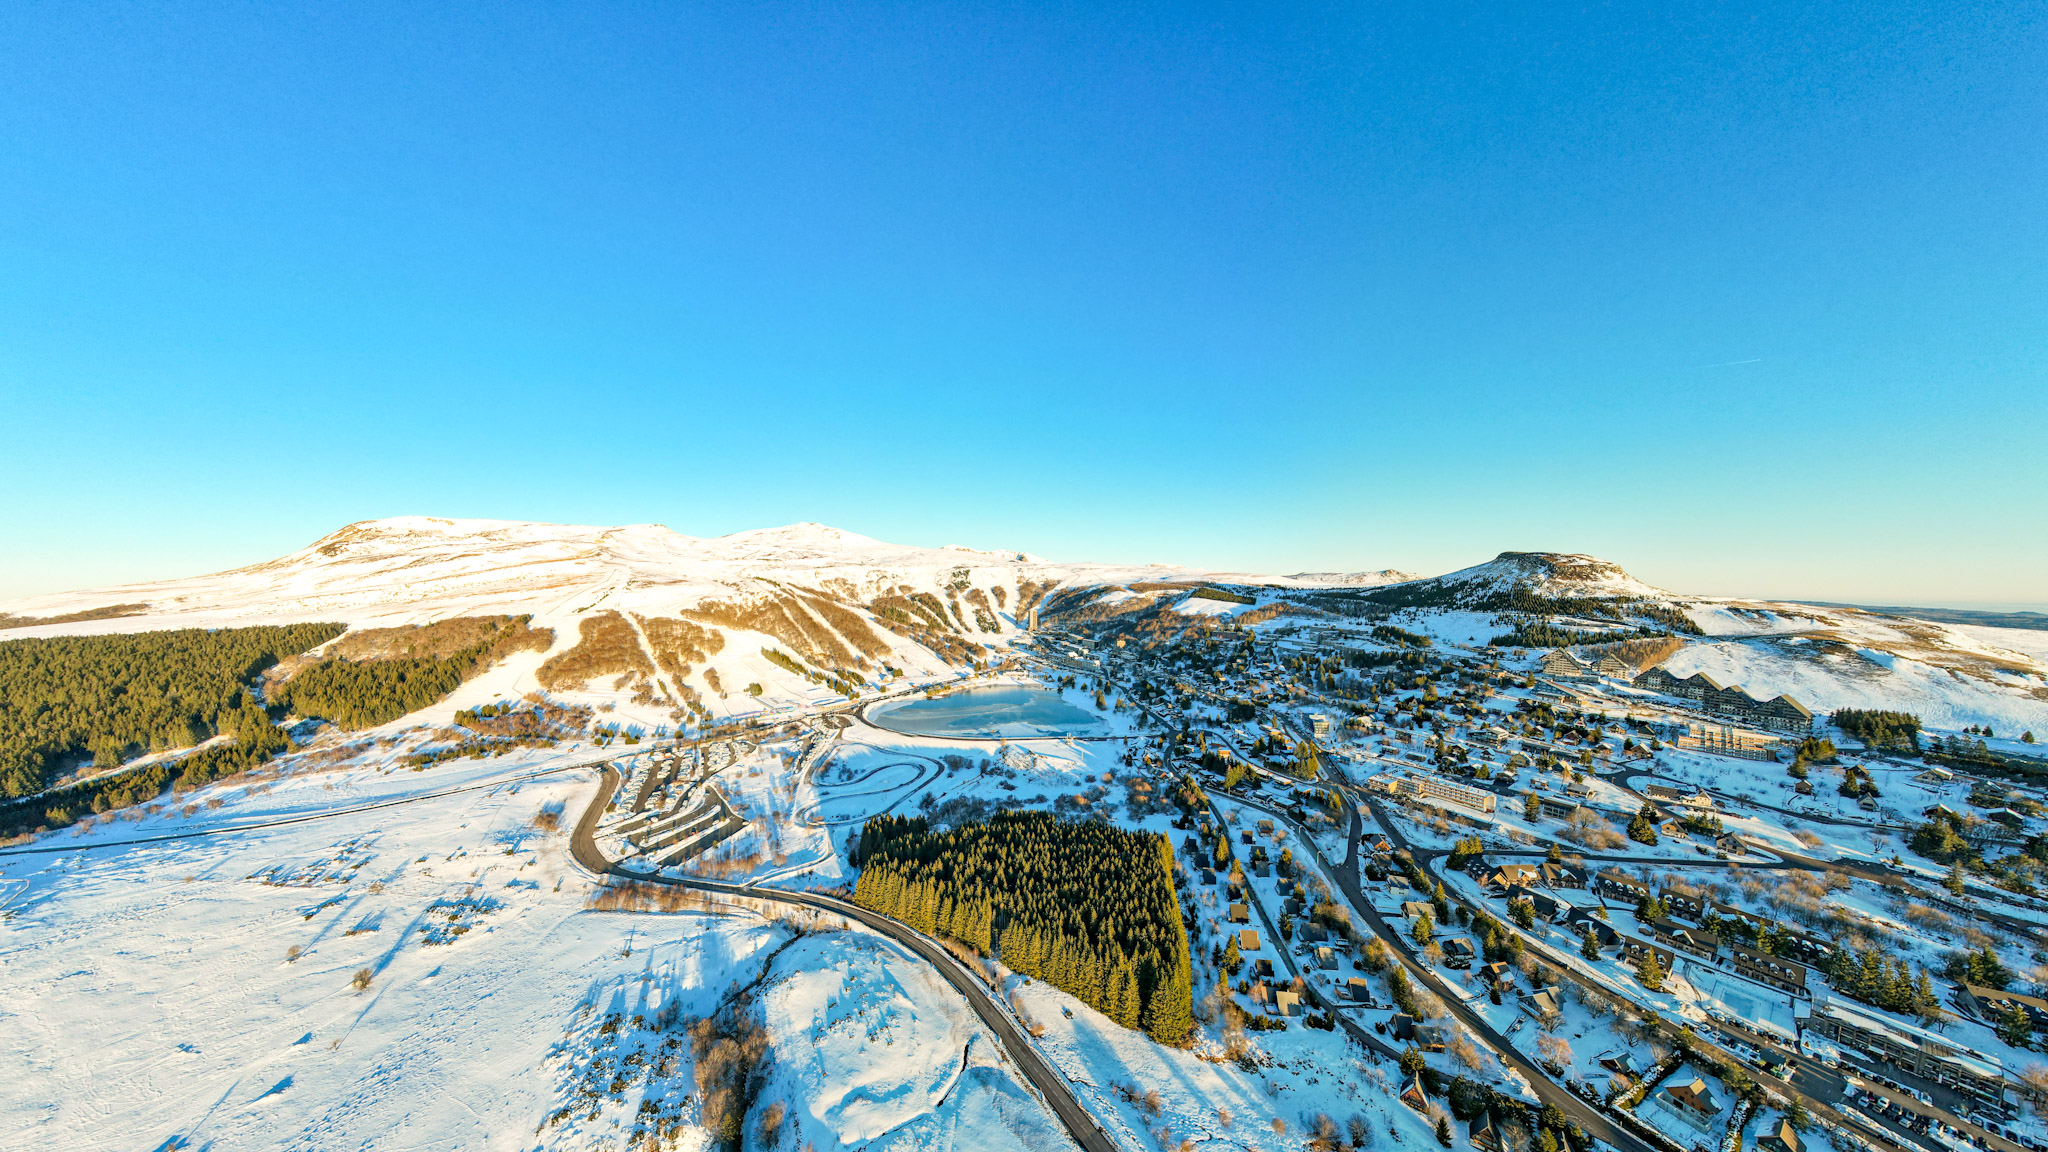 Super Besse ski resort seen from the sky